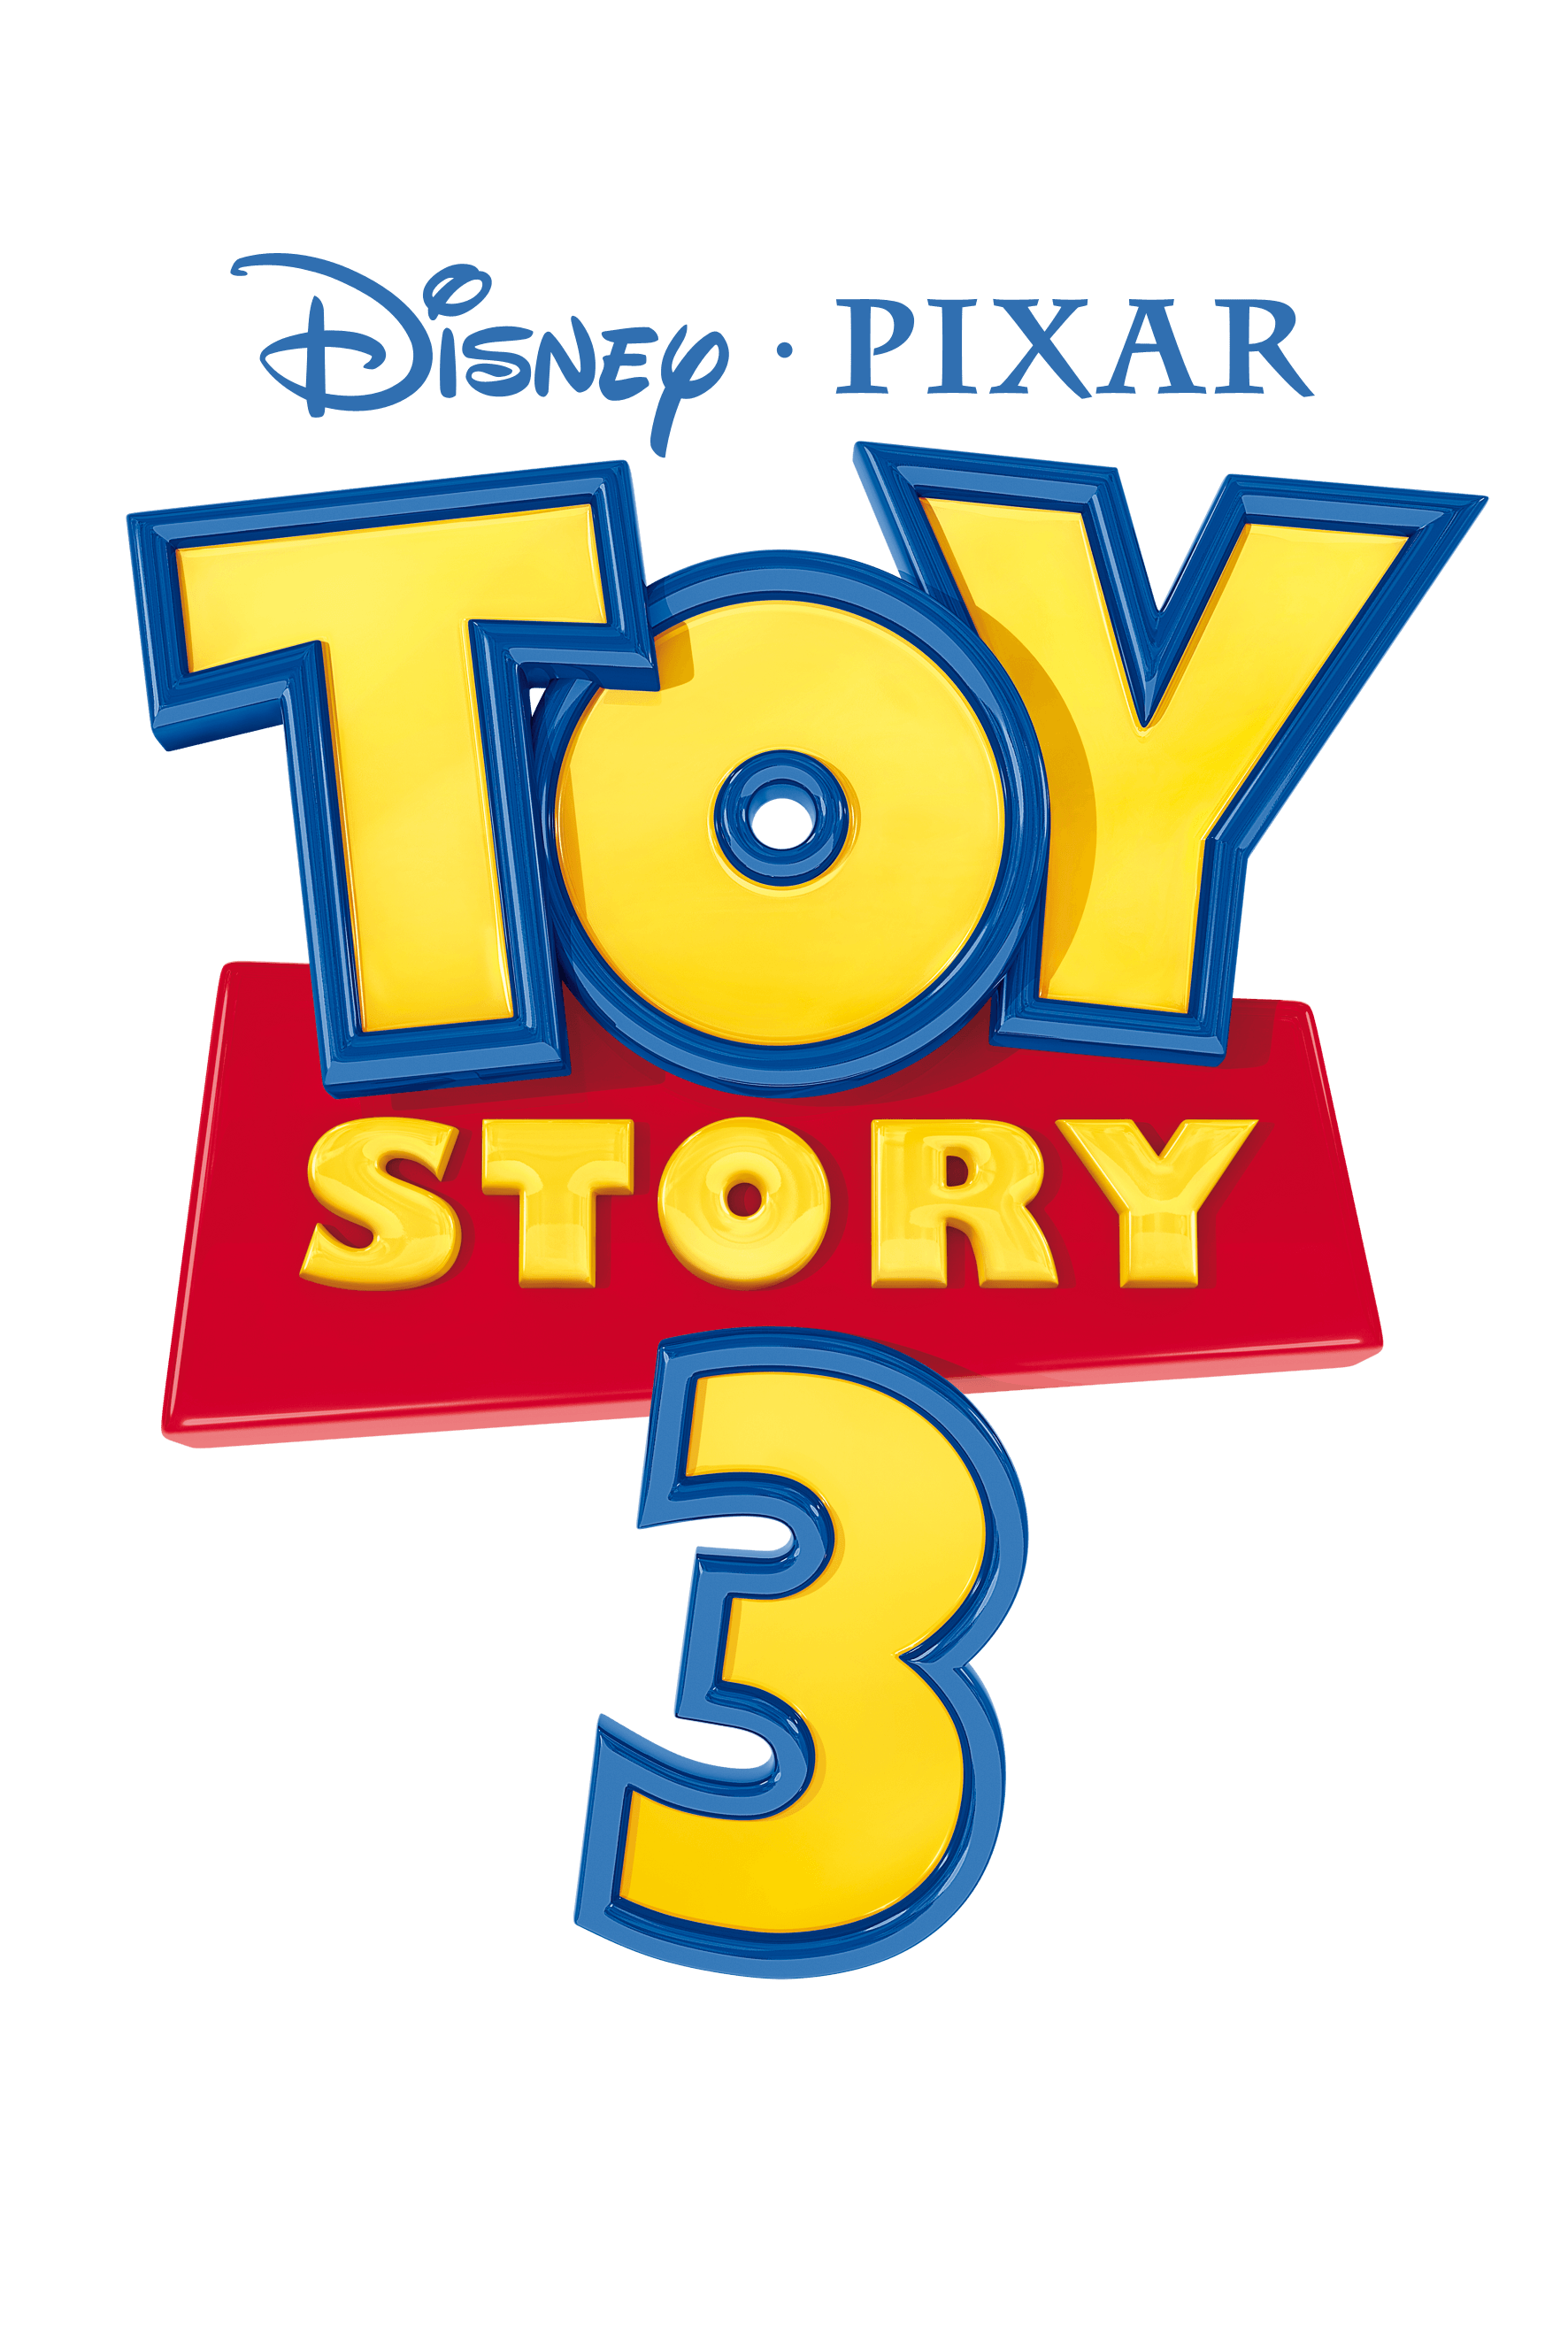 MB Toy Logo - Toy Story 3 logo.png. Jack Miller's Webpage of Disney